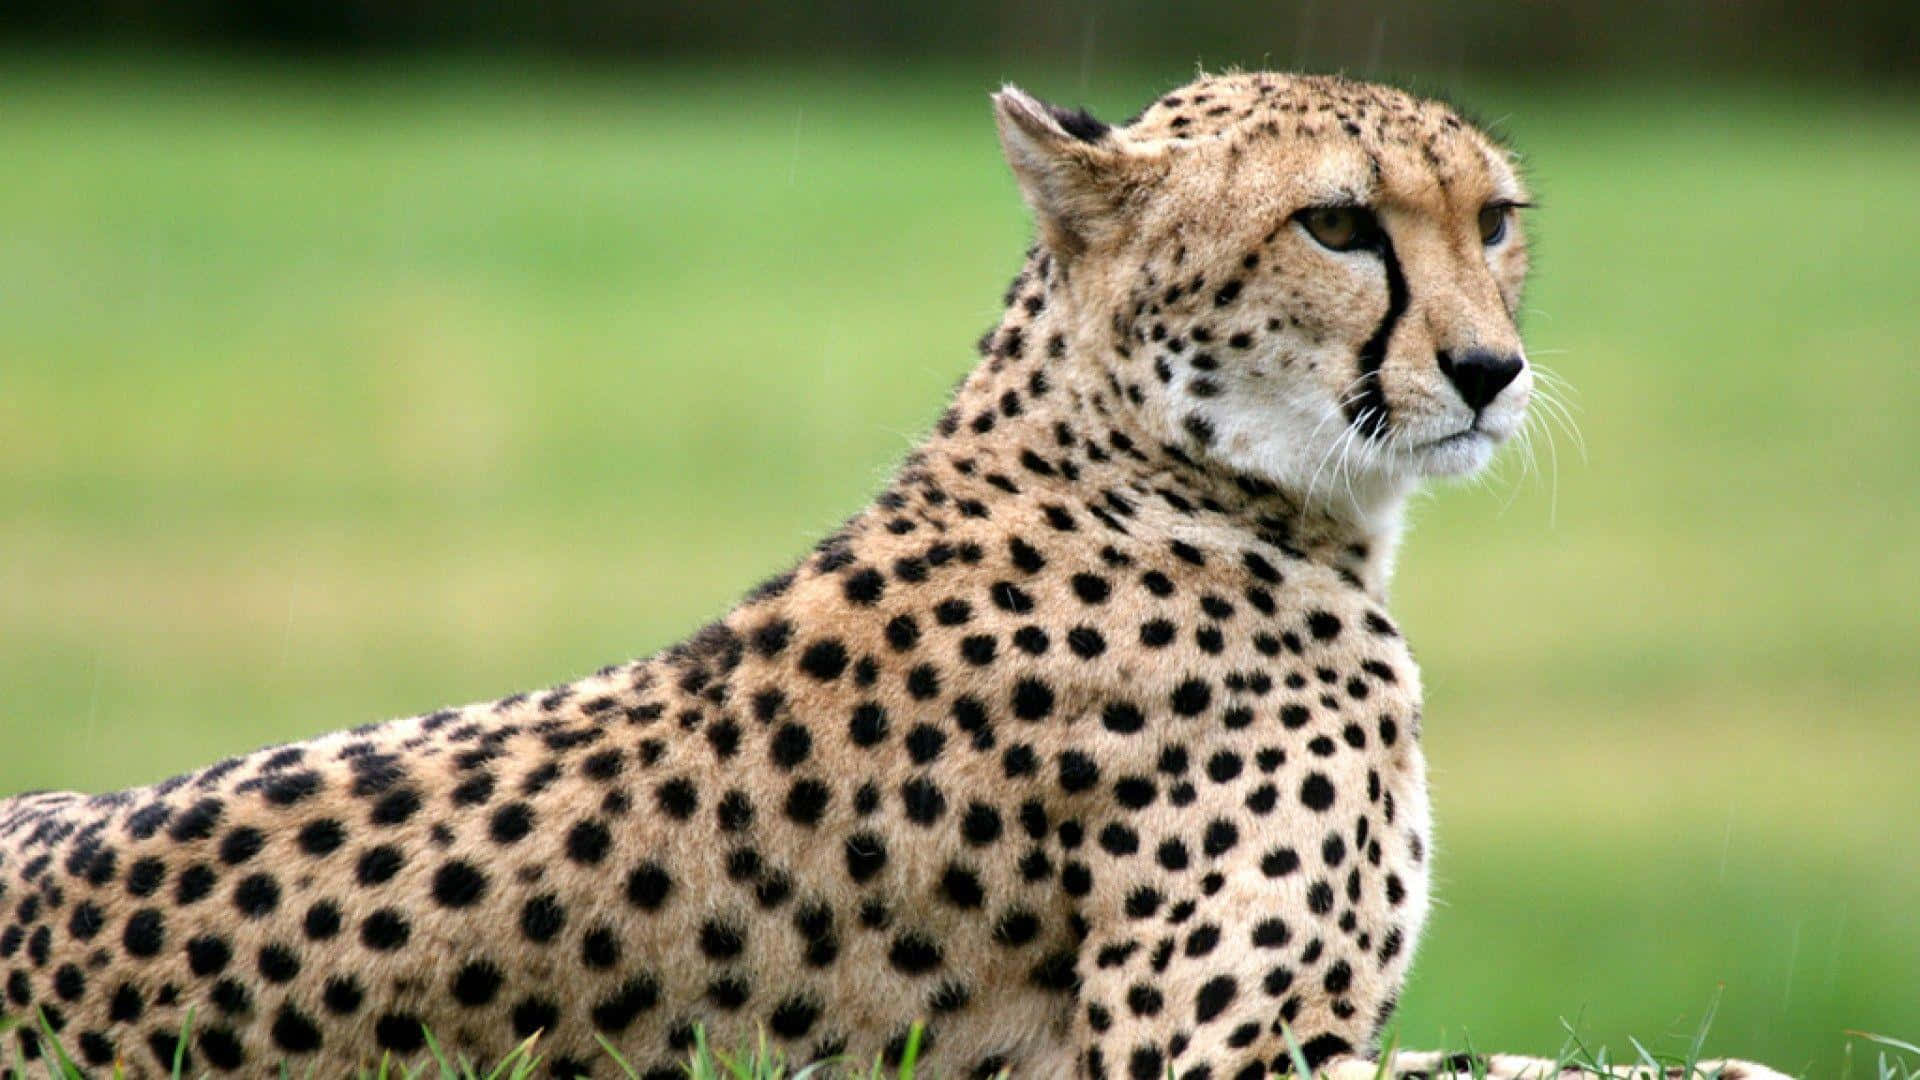 A portrait of a gracefully running cheetah